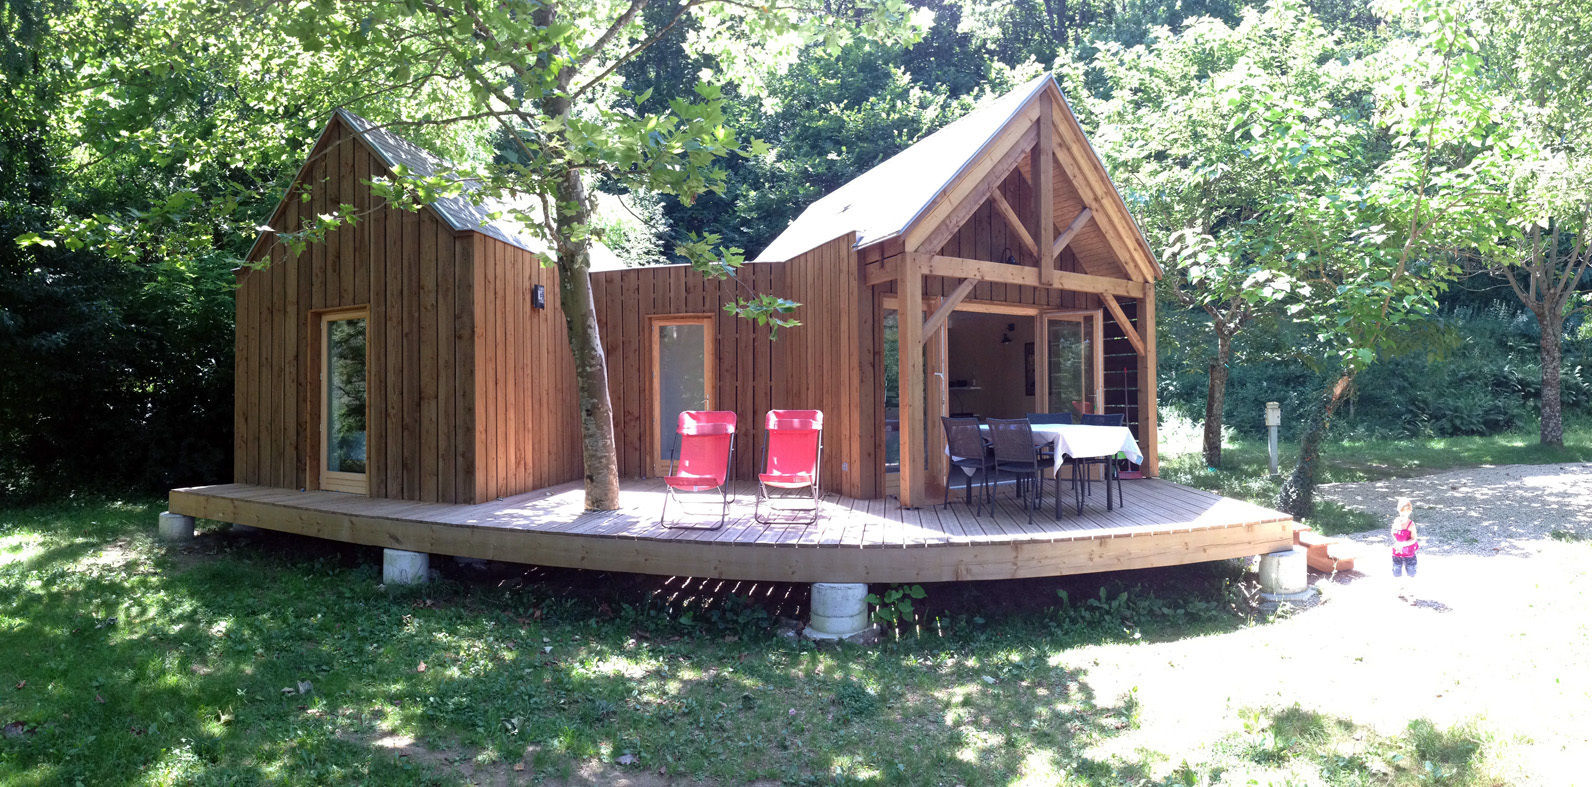 Habitat de loisir en bois - camping les Clots mirandol - bourgnounac, ...architectes ...architectes 상업공간 호텔